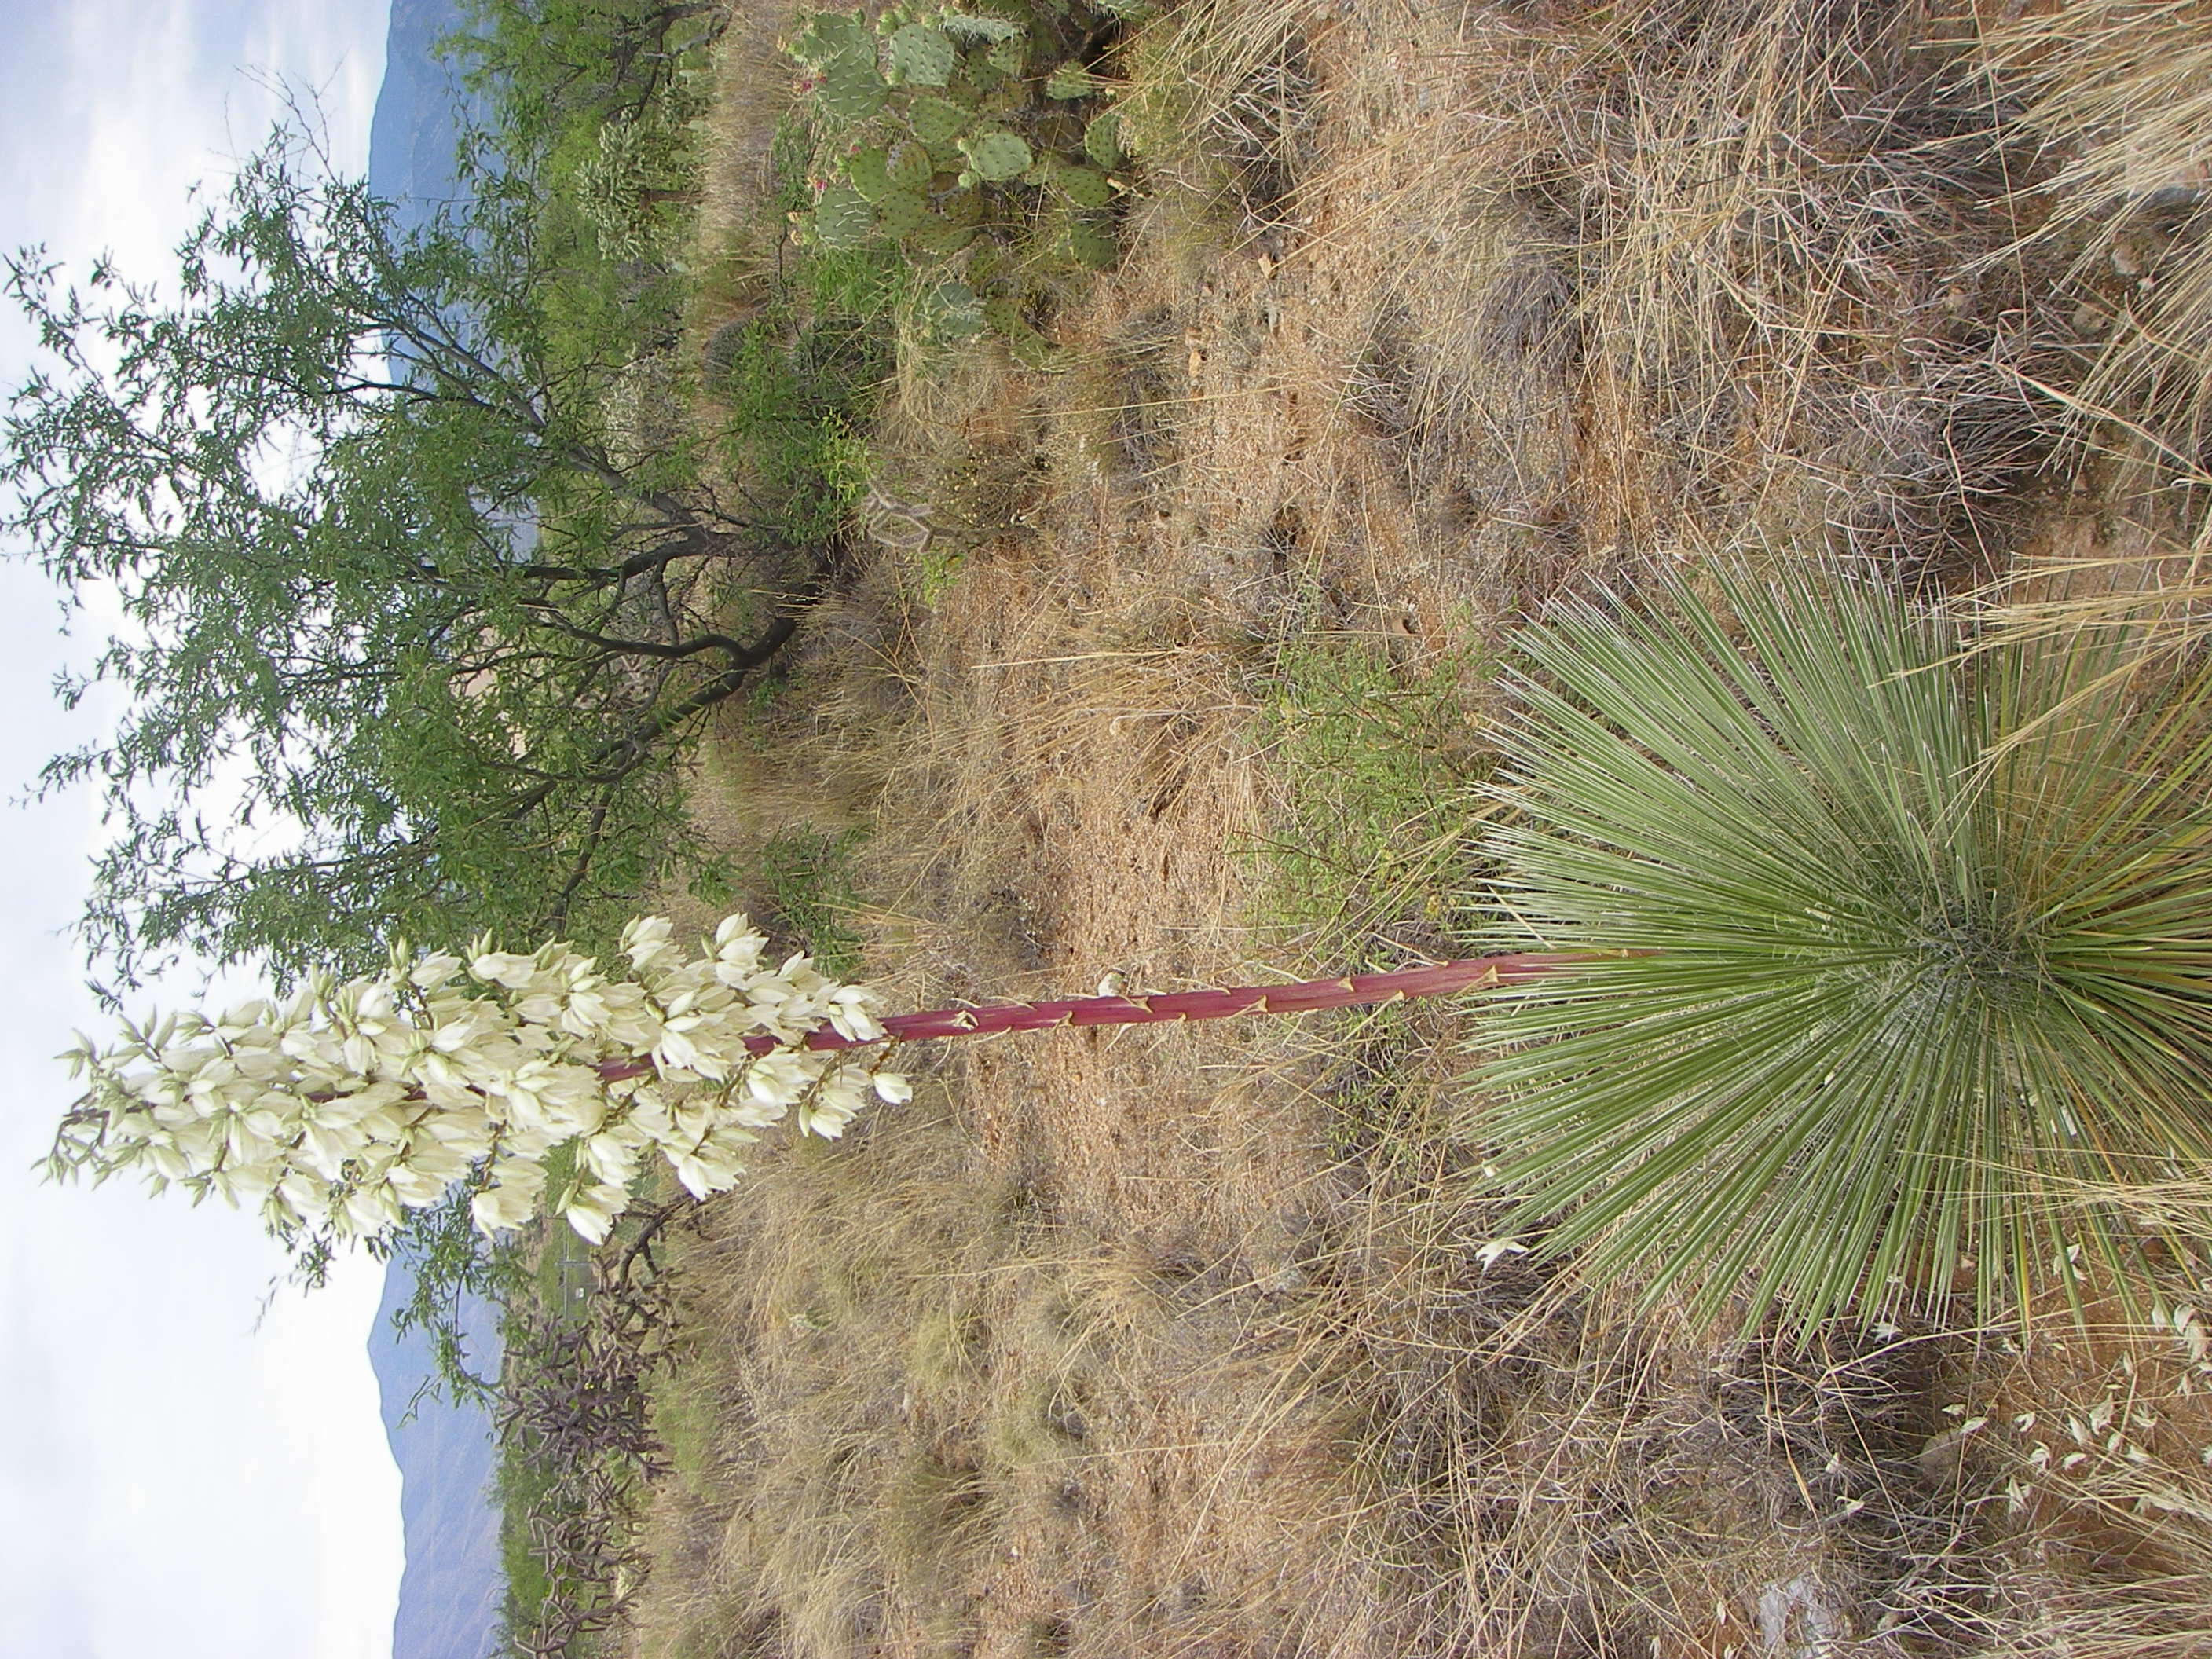 Image of yucca